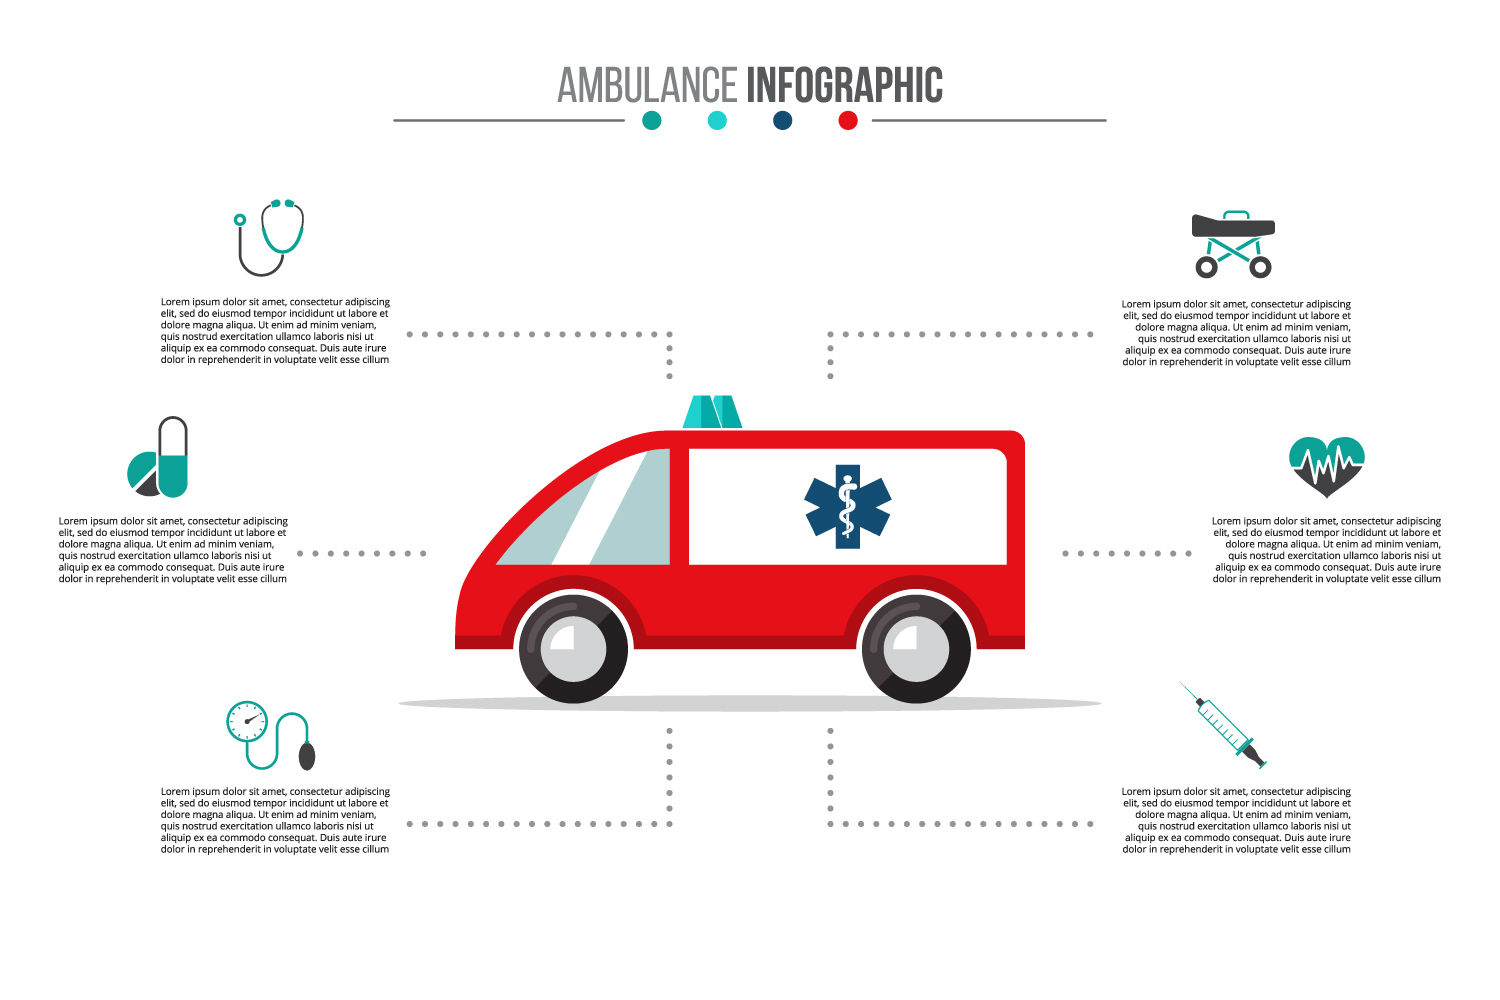 medical infographic design